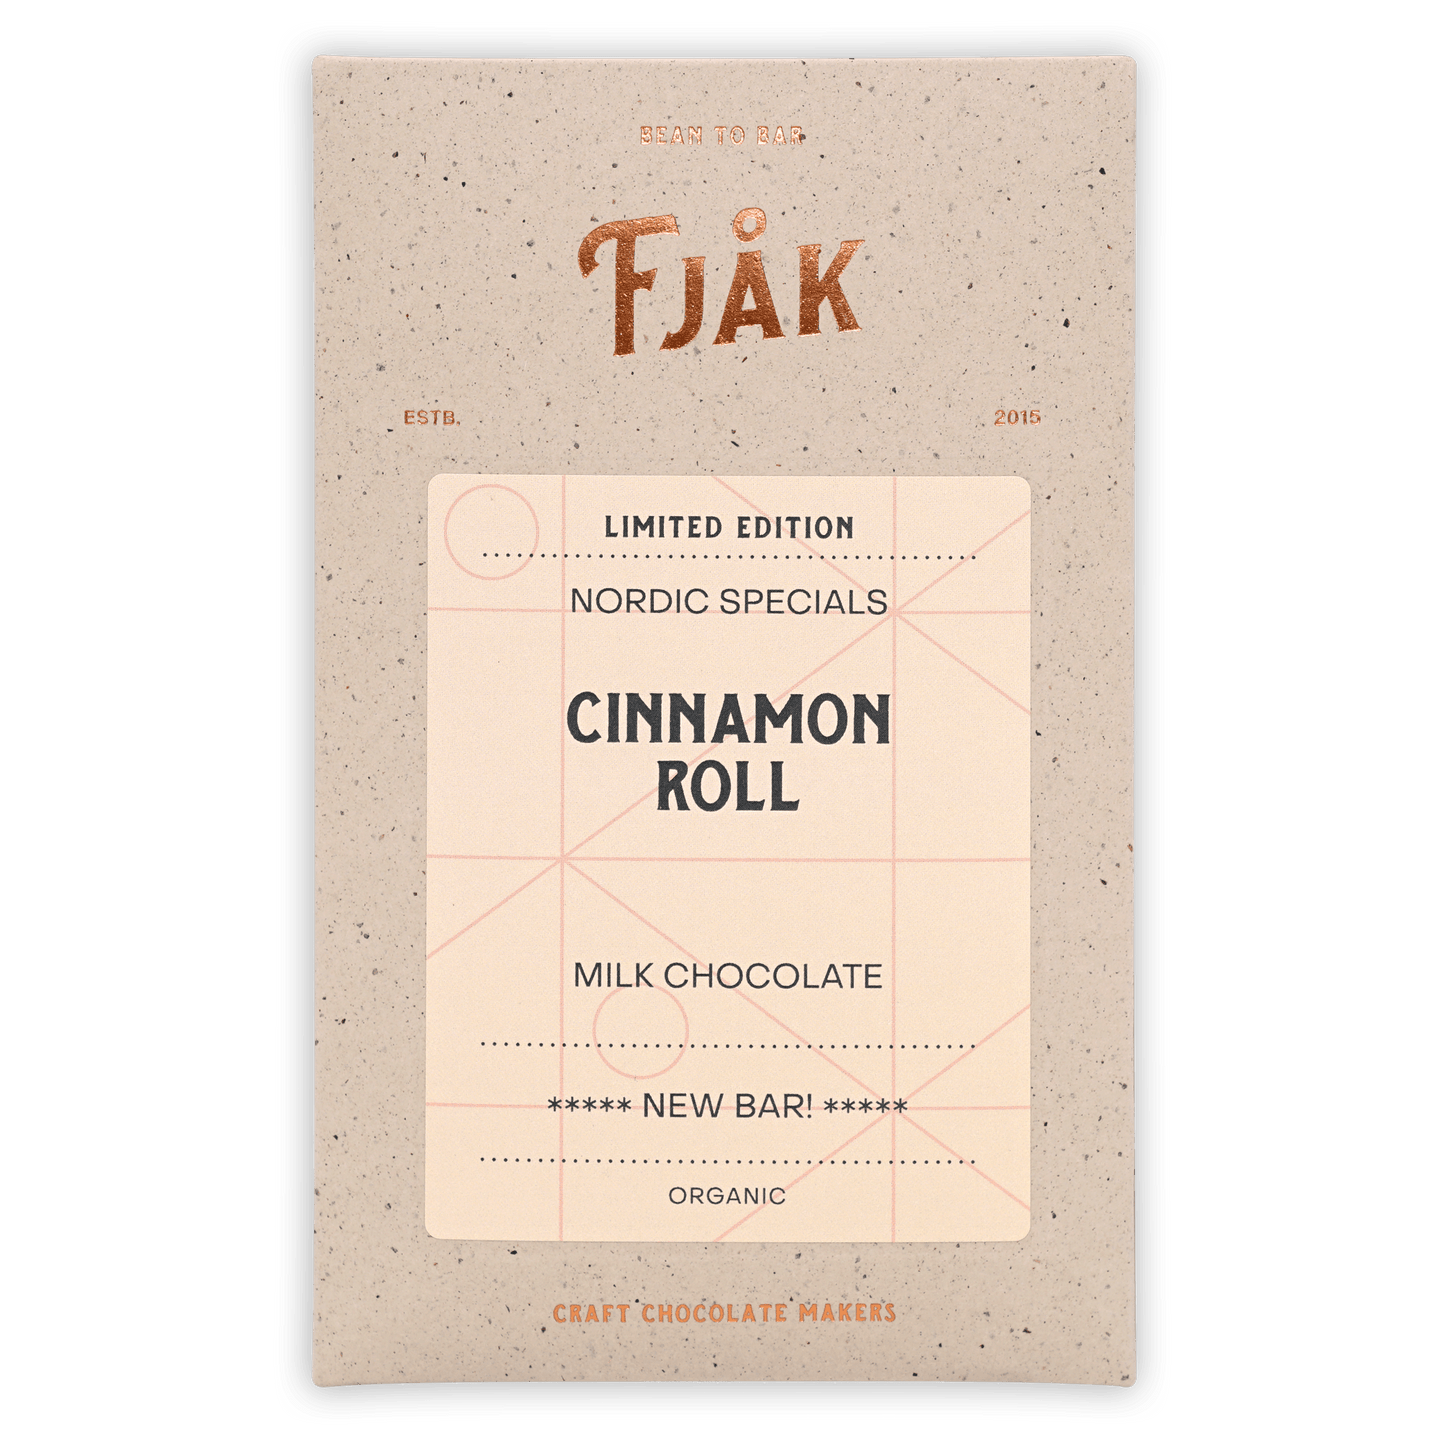 Fjåk Cinnamon Roll Milk Chocolate 45% (Limited Edition)